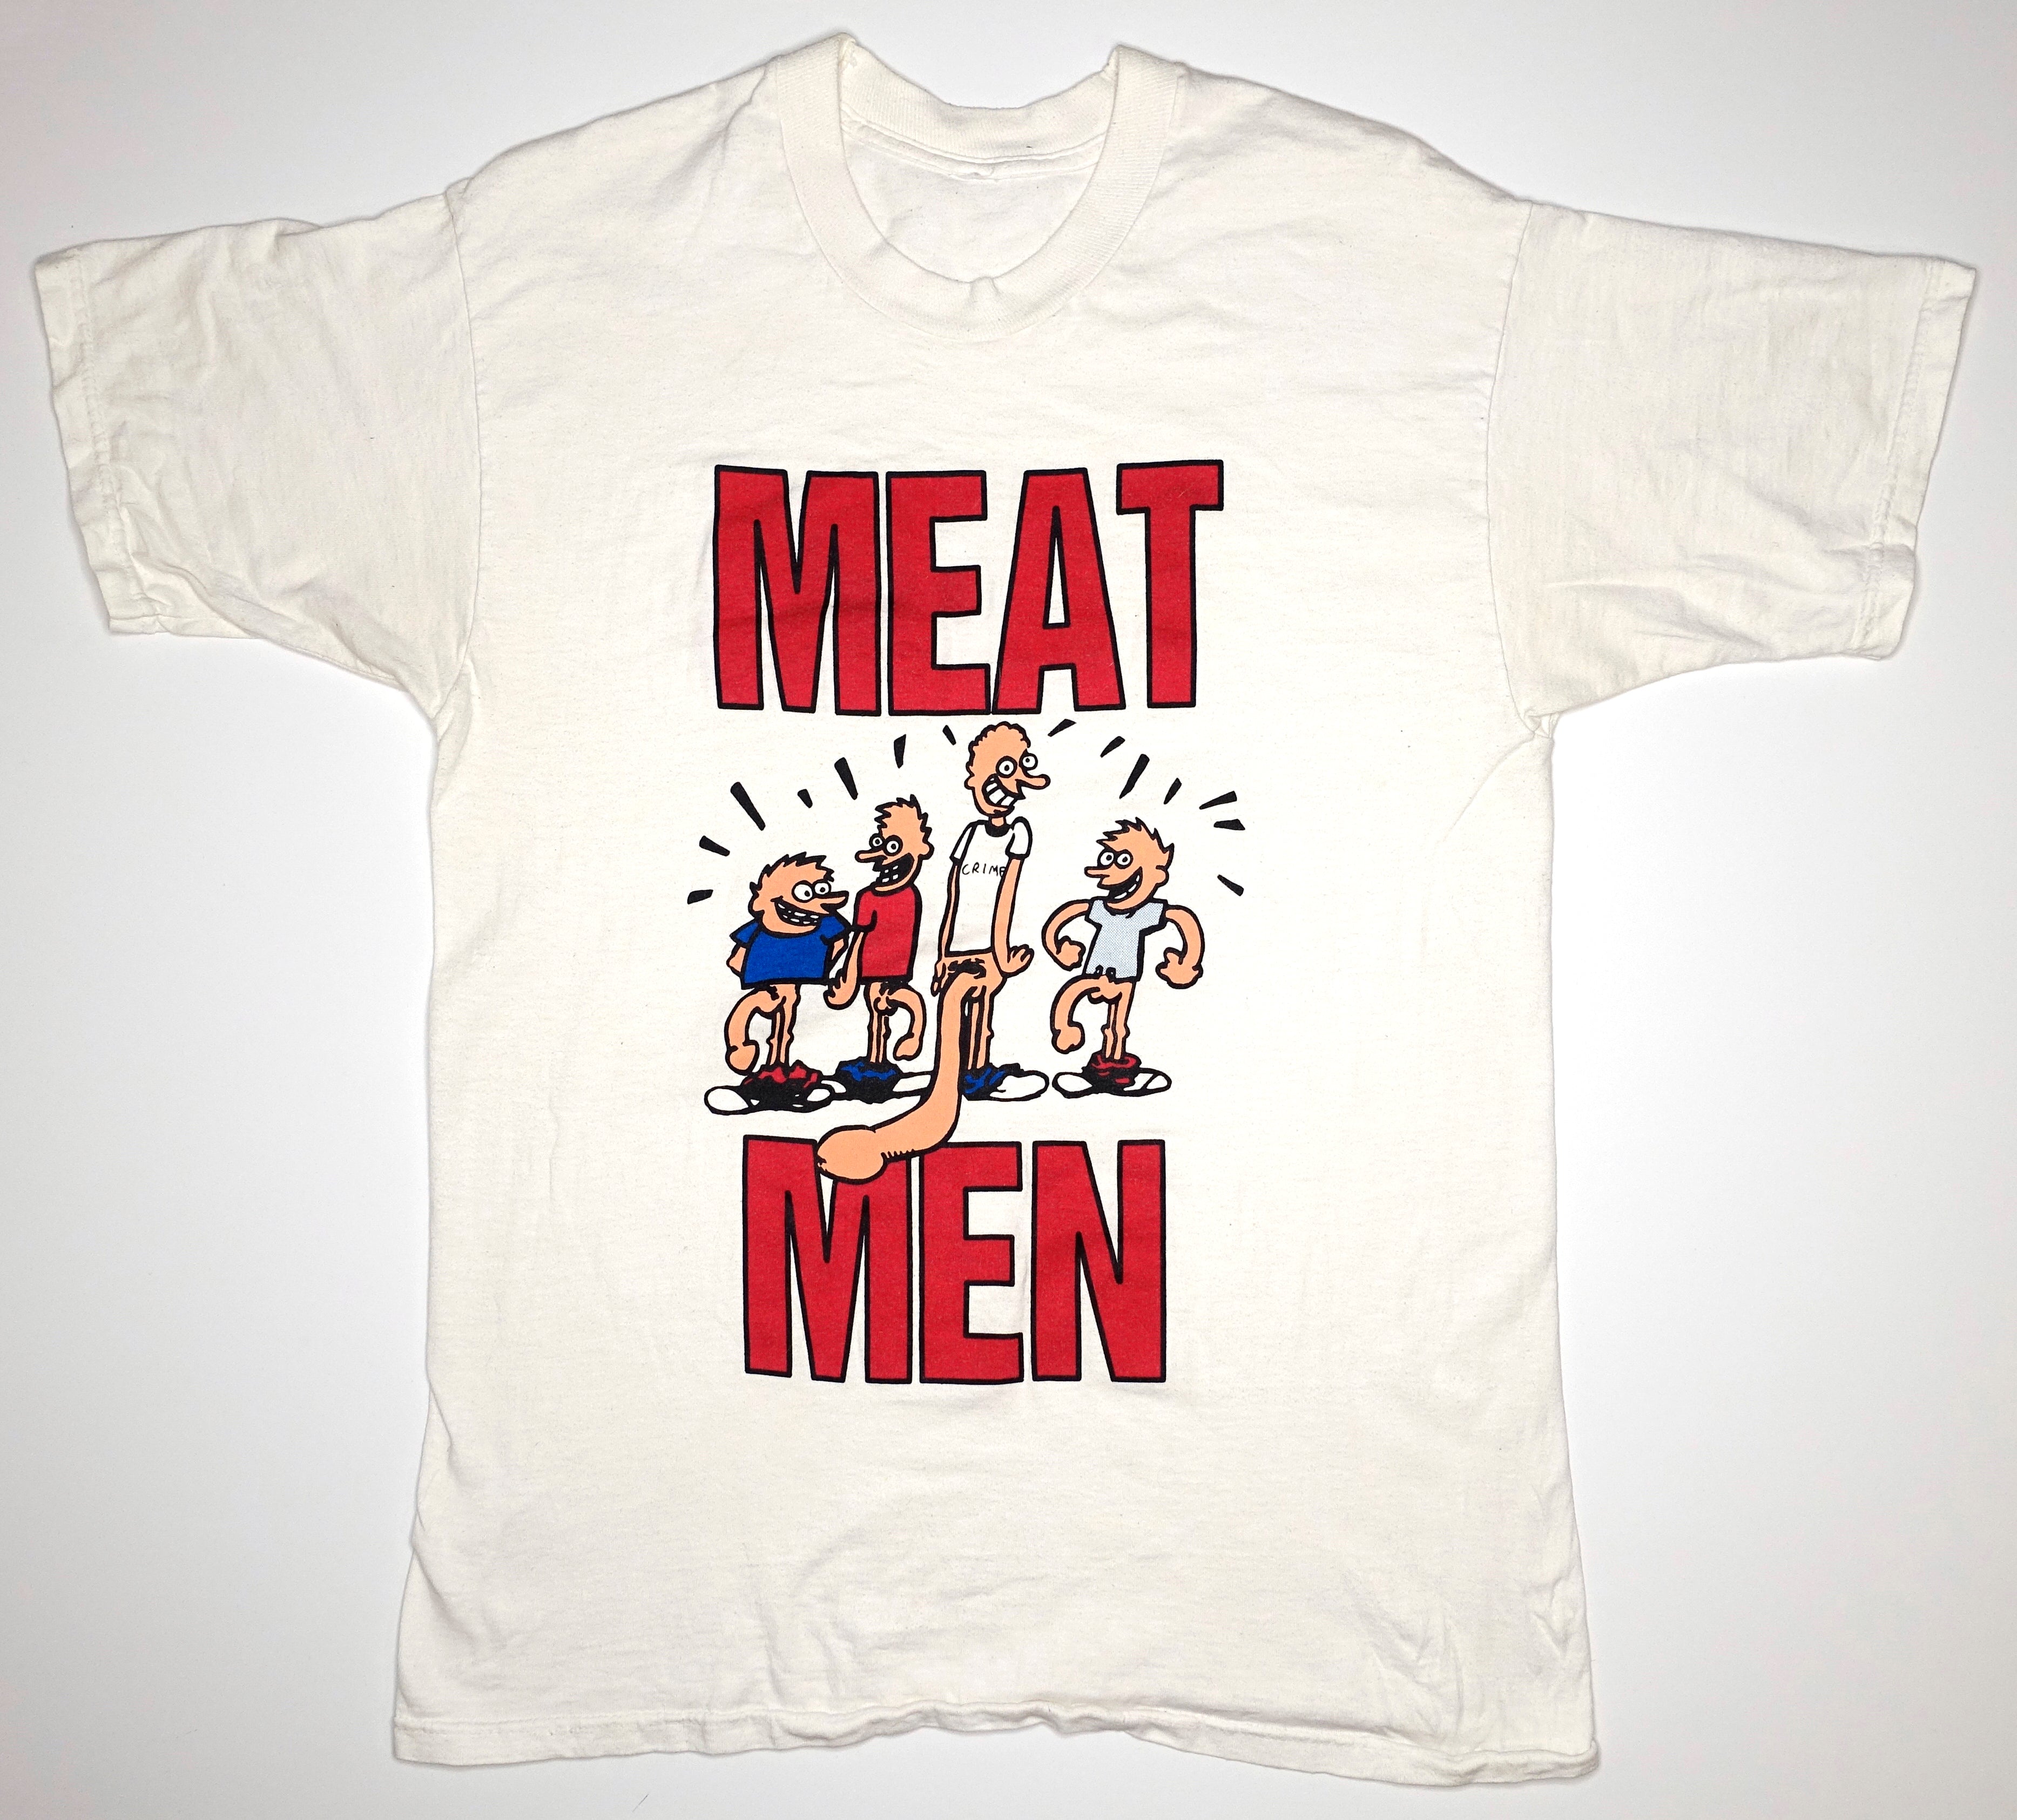 Meatmen - Stud Powercock 1991 Tour Shirt Size XL / Large